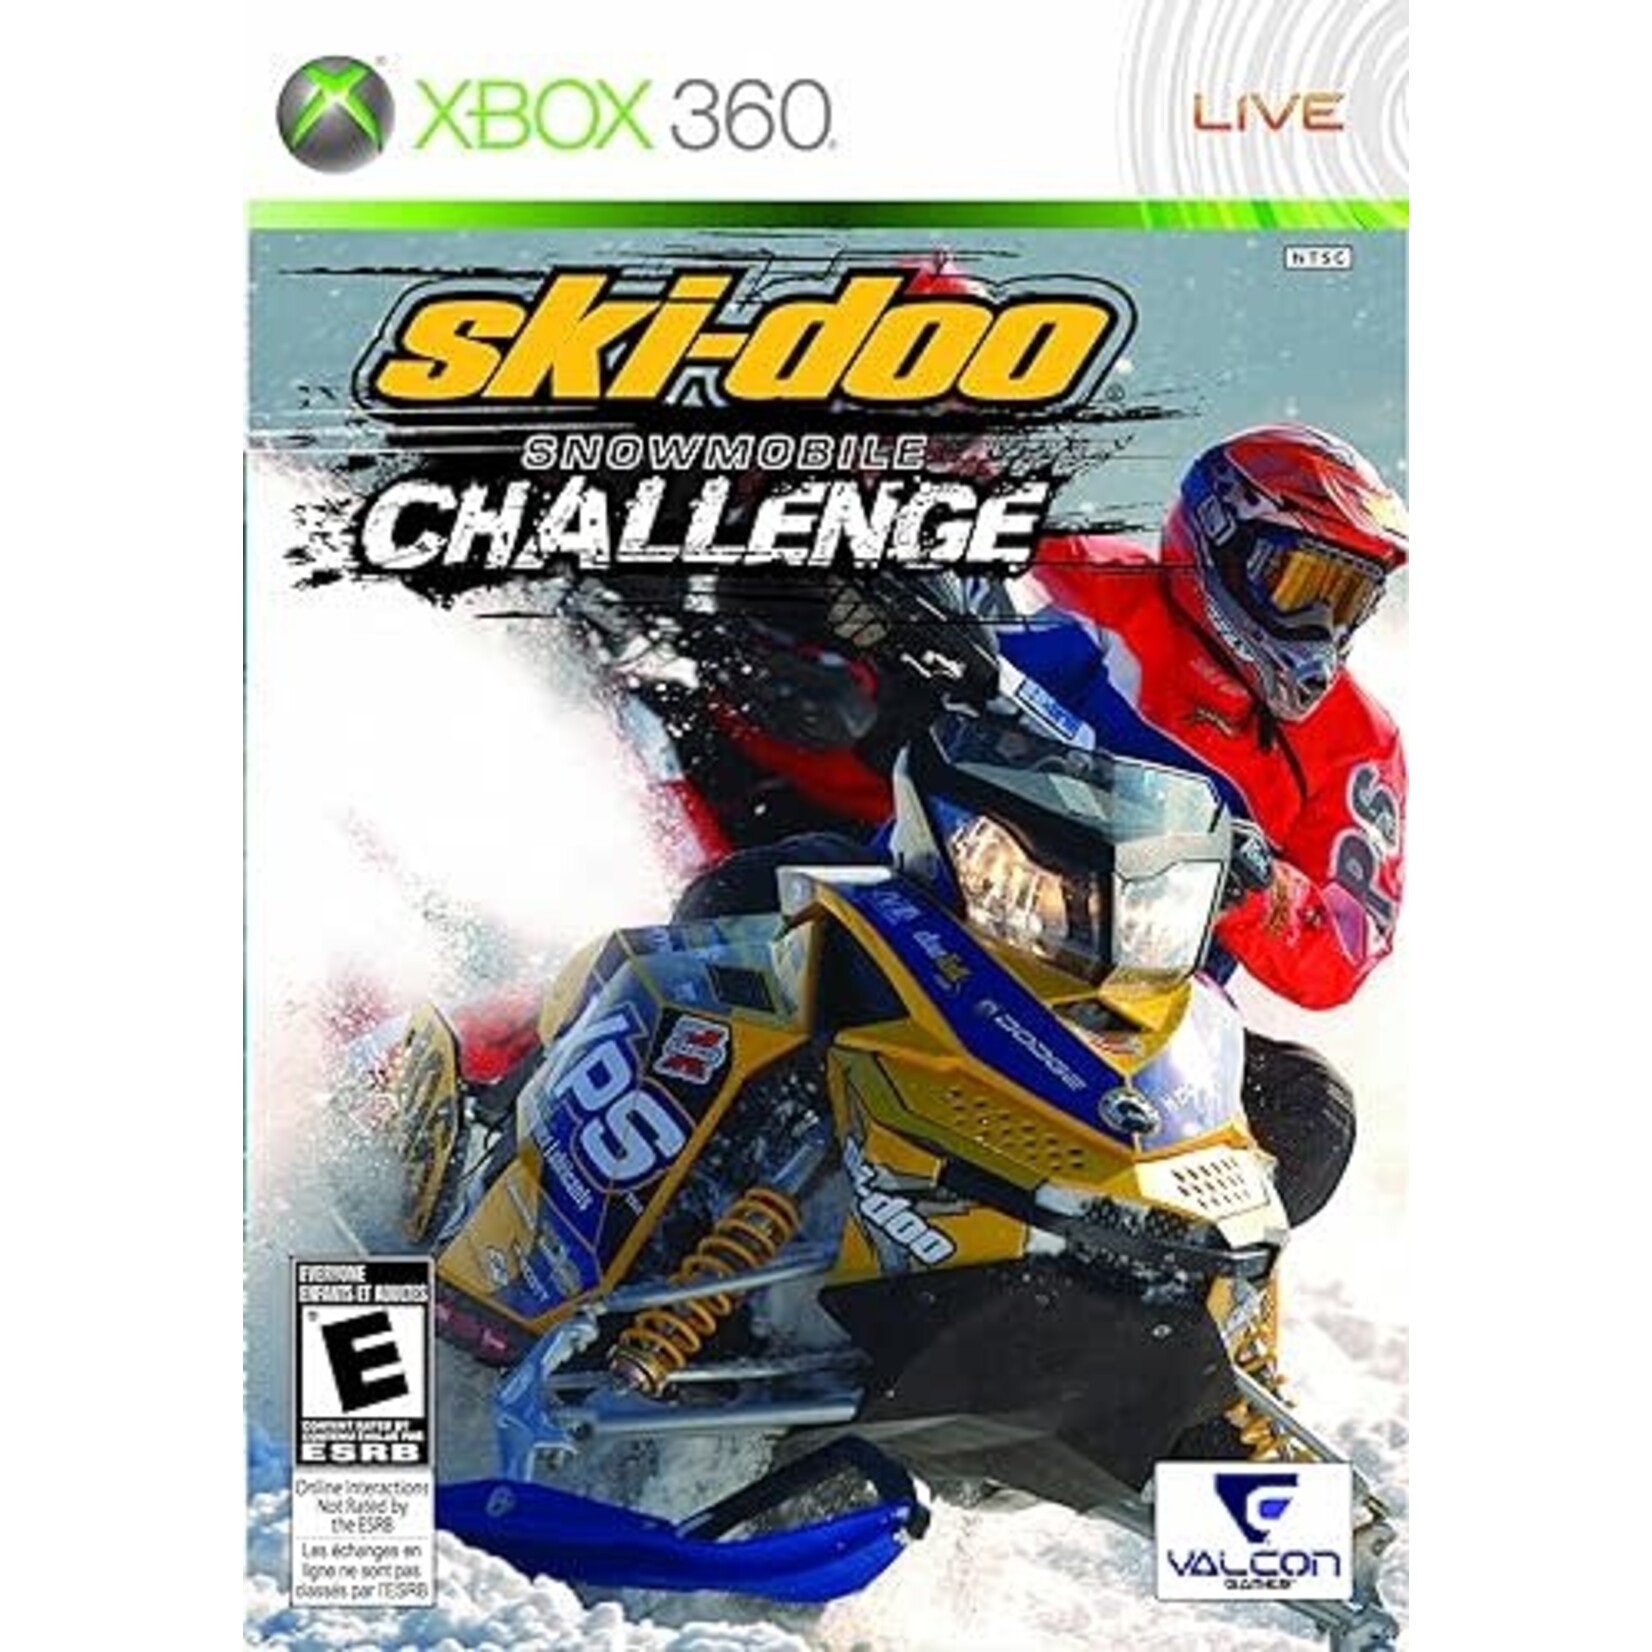 X3U-Ski Doo Snowmobile Challenge